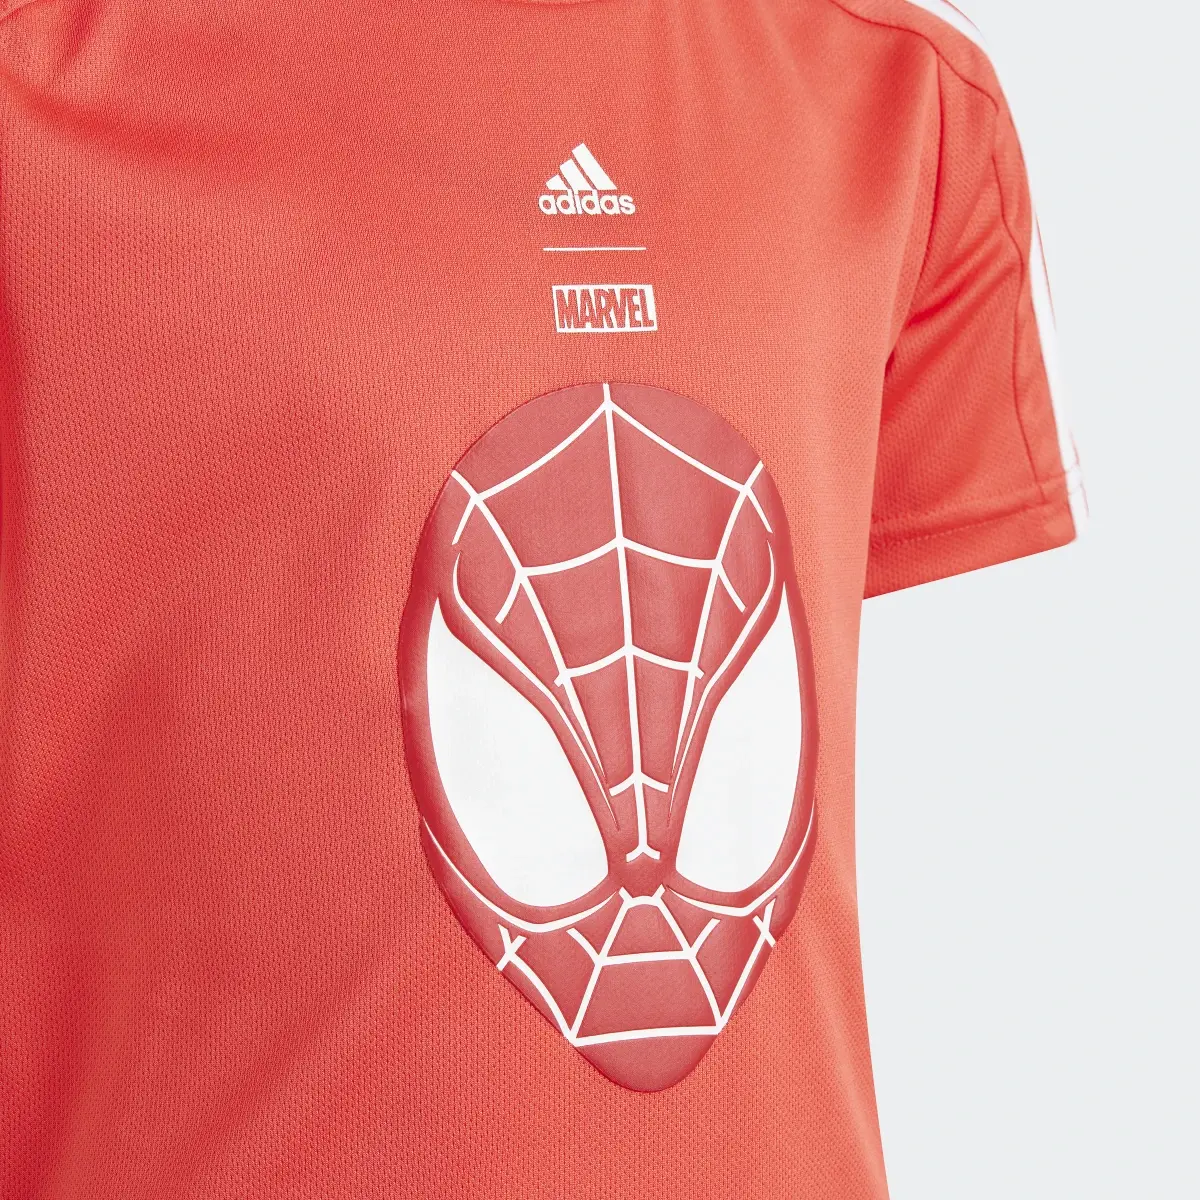 Adidas x Marvel Spider-Man T-Shirt. 3